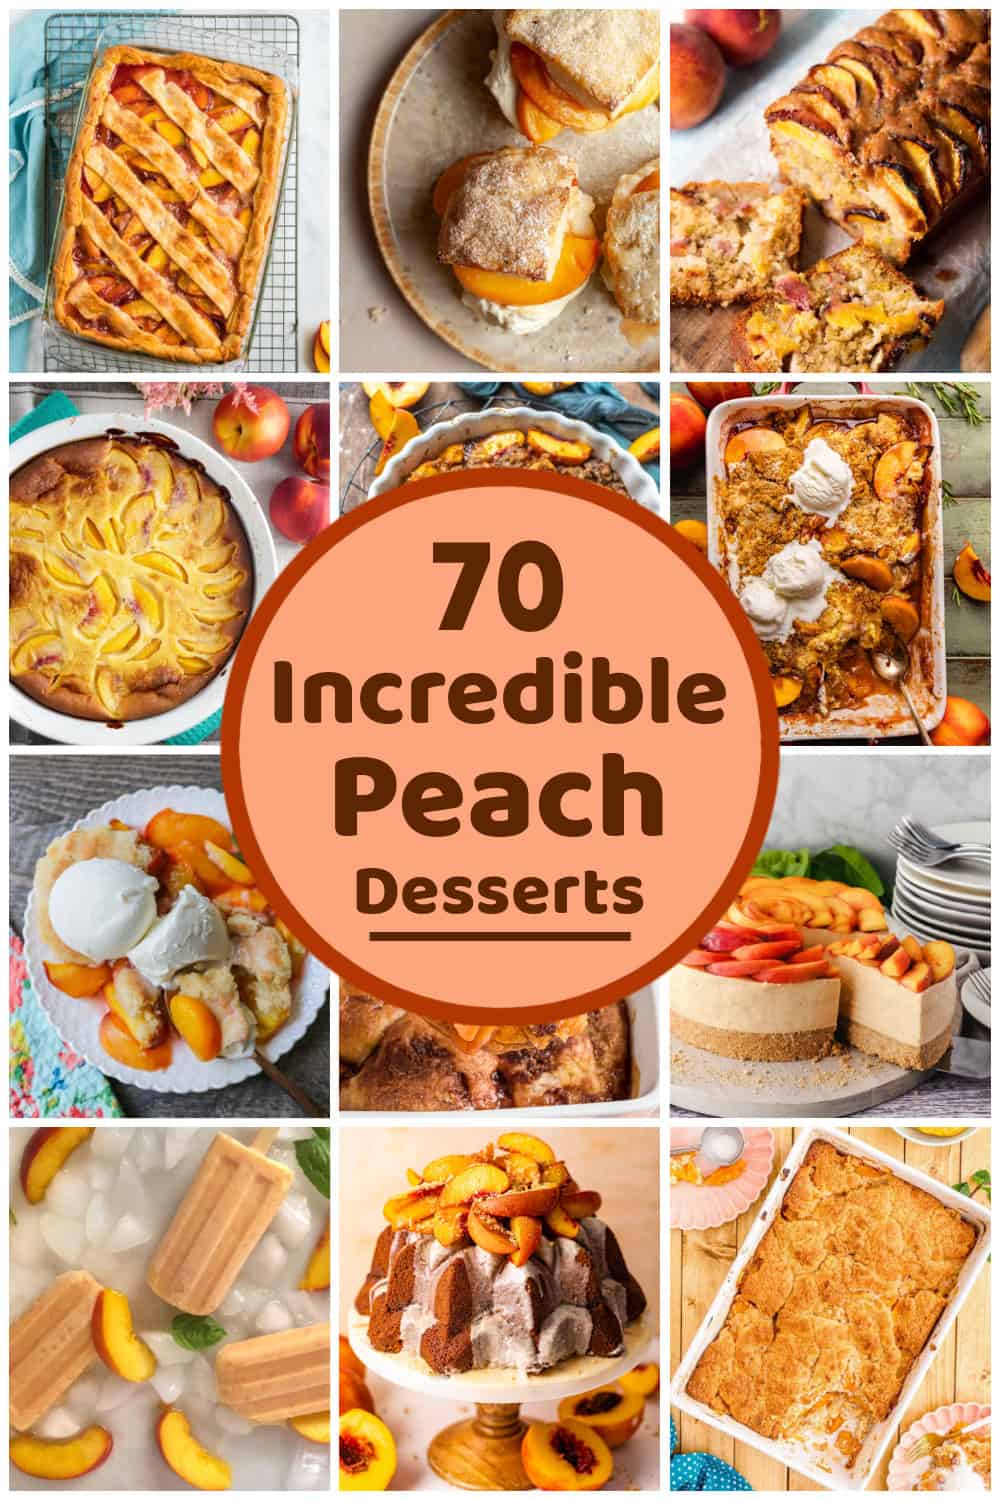 70 Incredible Peach Desserts